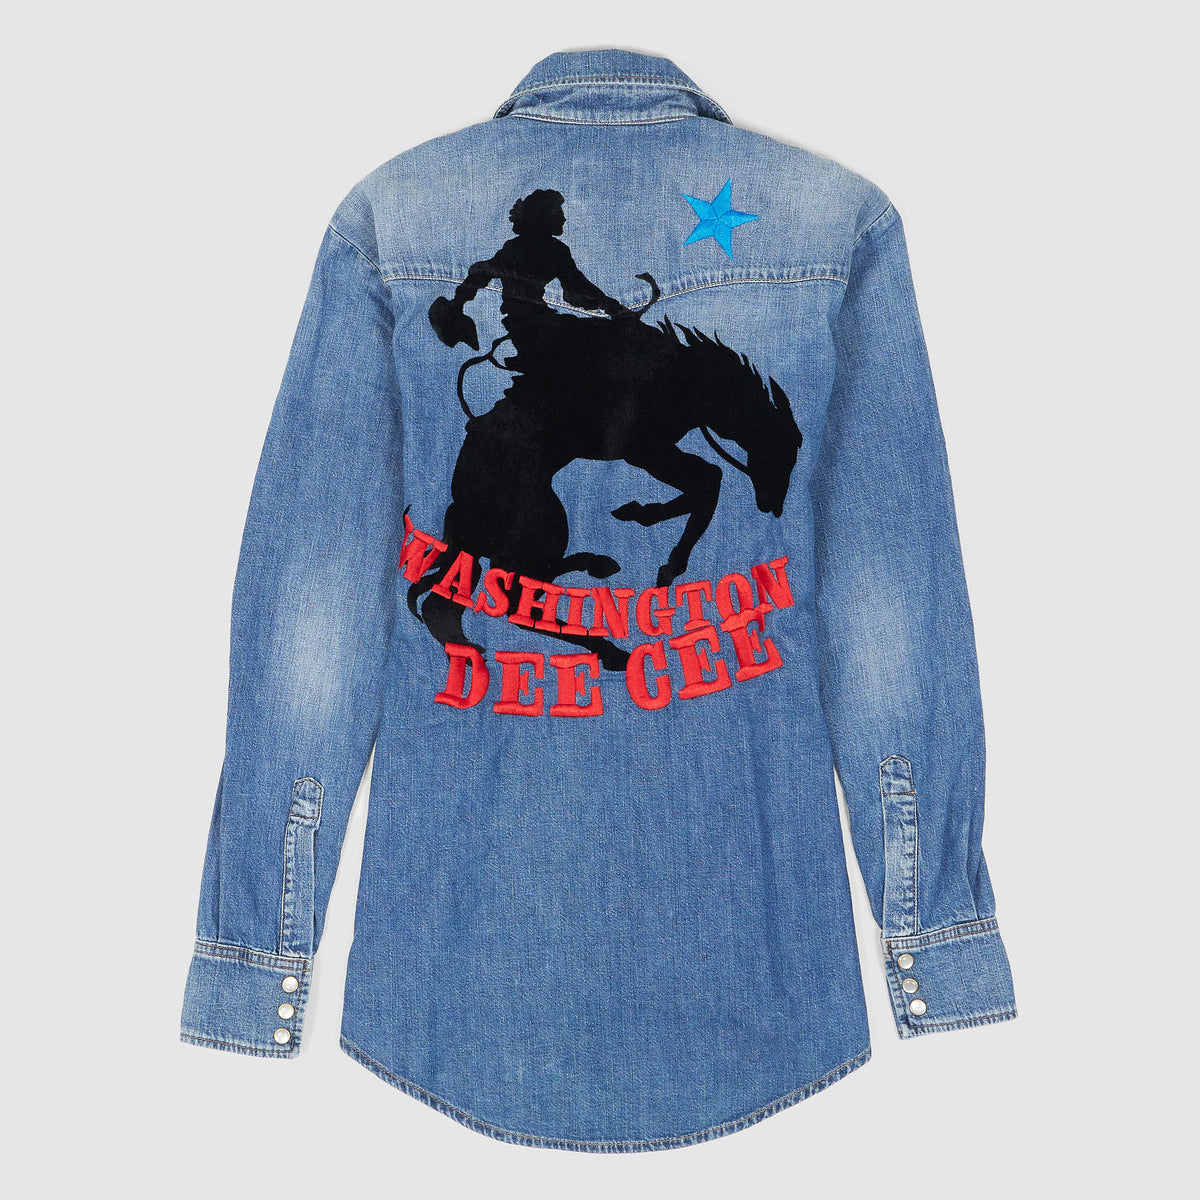 Washington Dee-Cee Ladies Embroidered Western Shirt